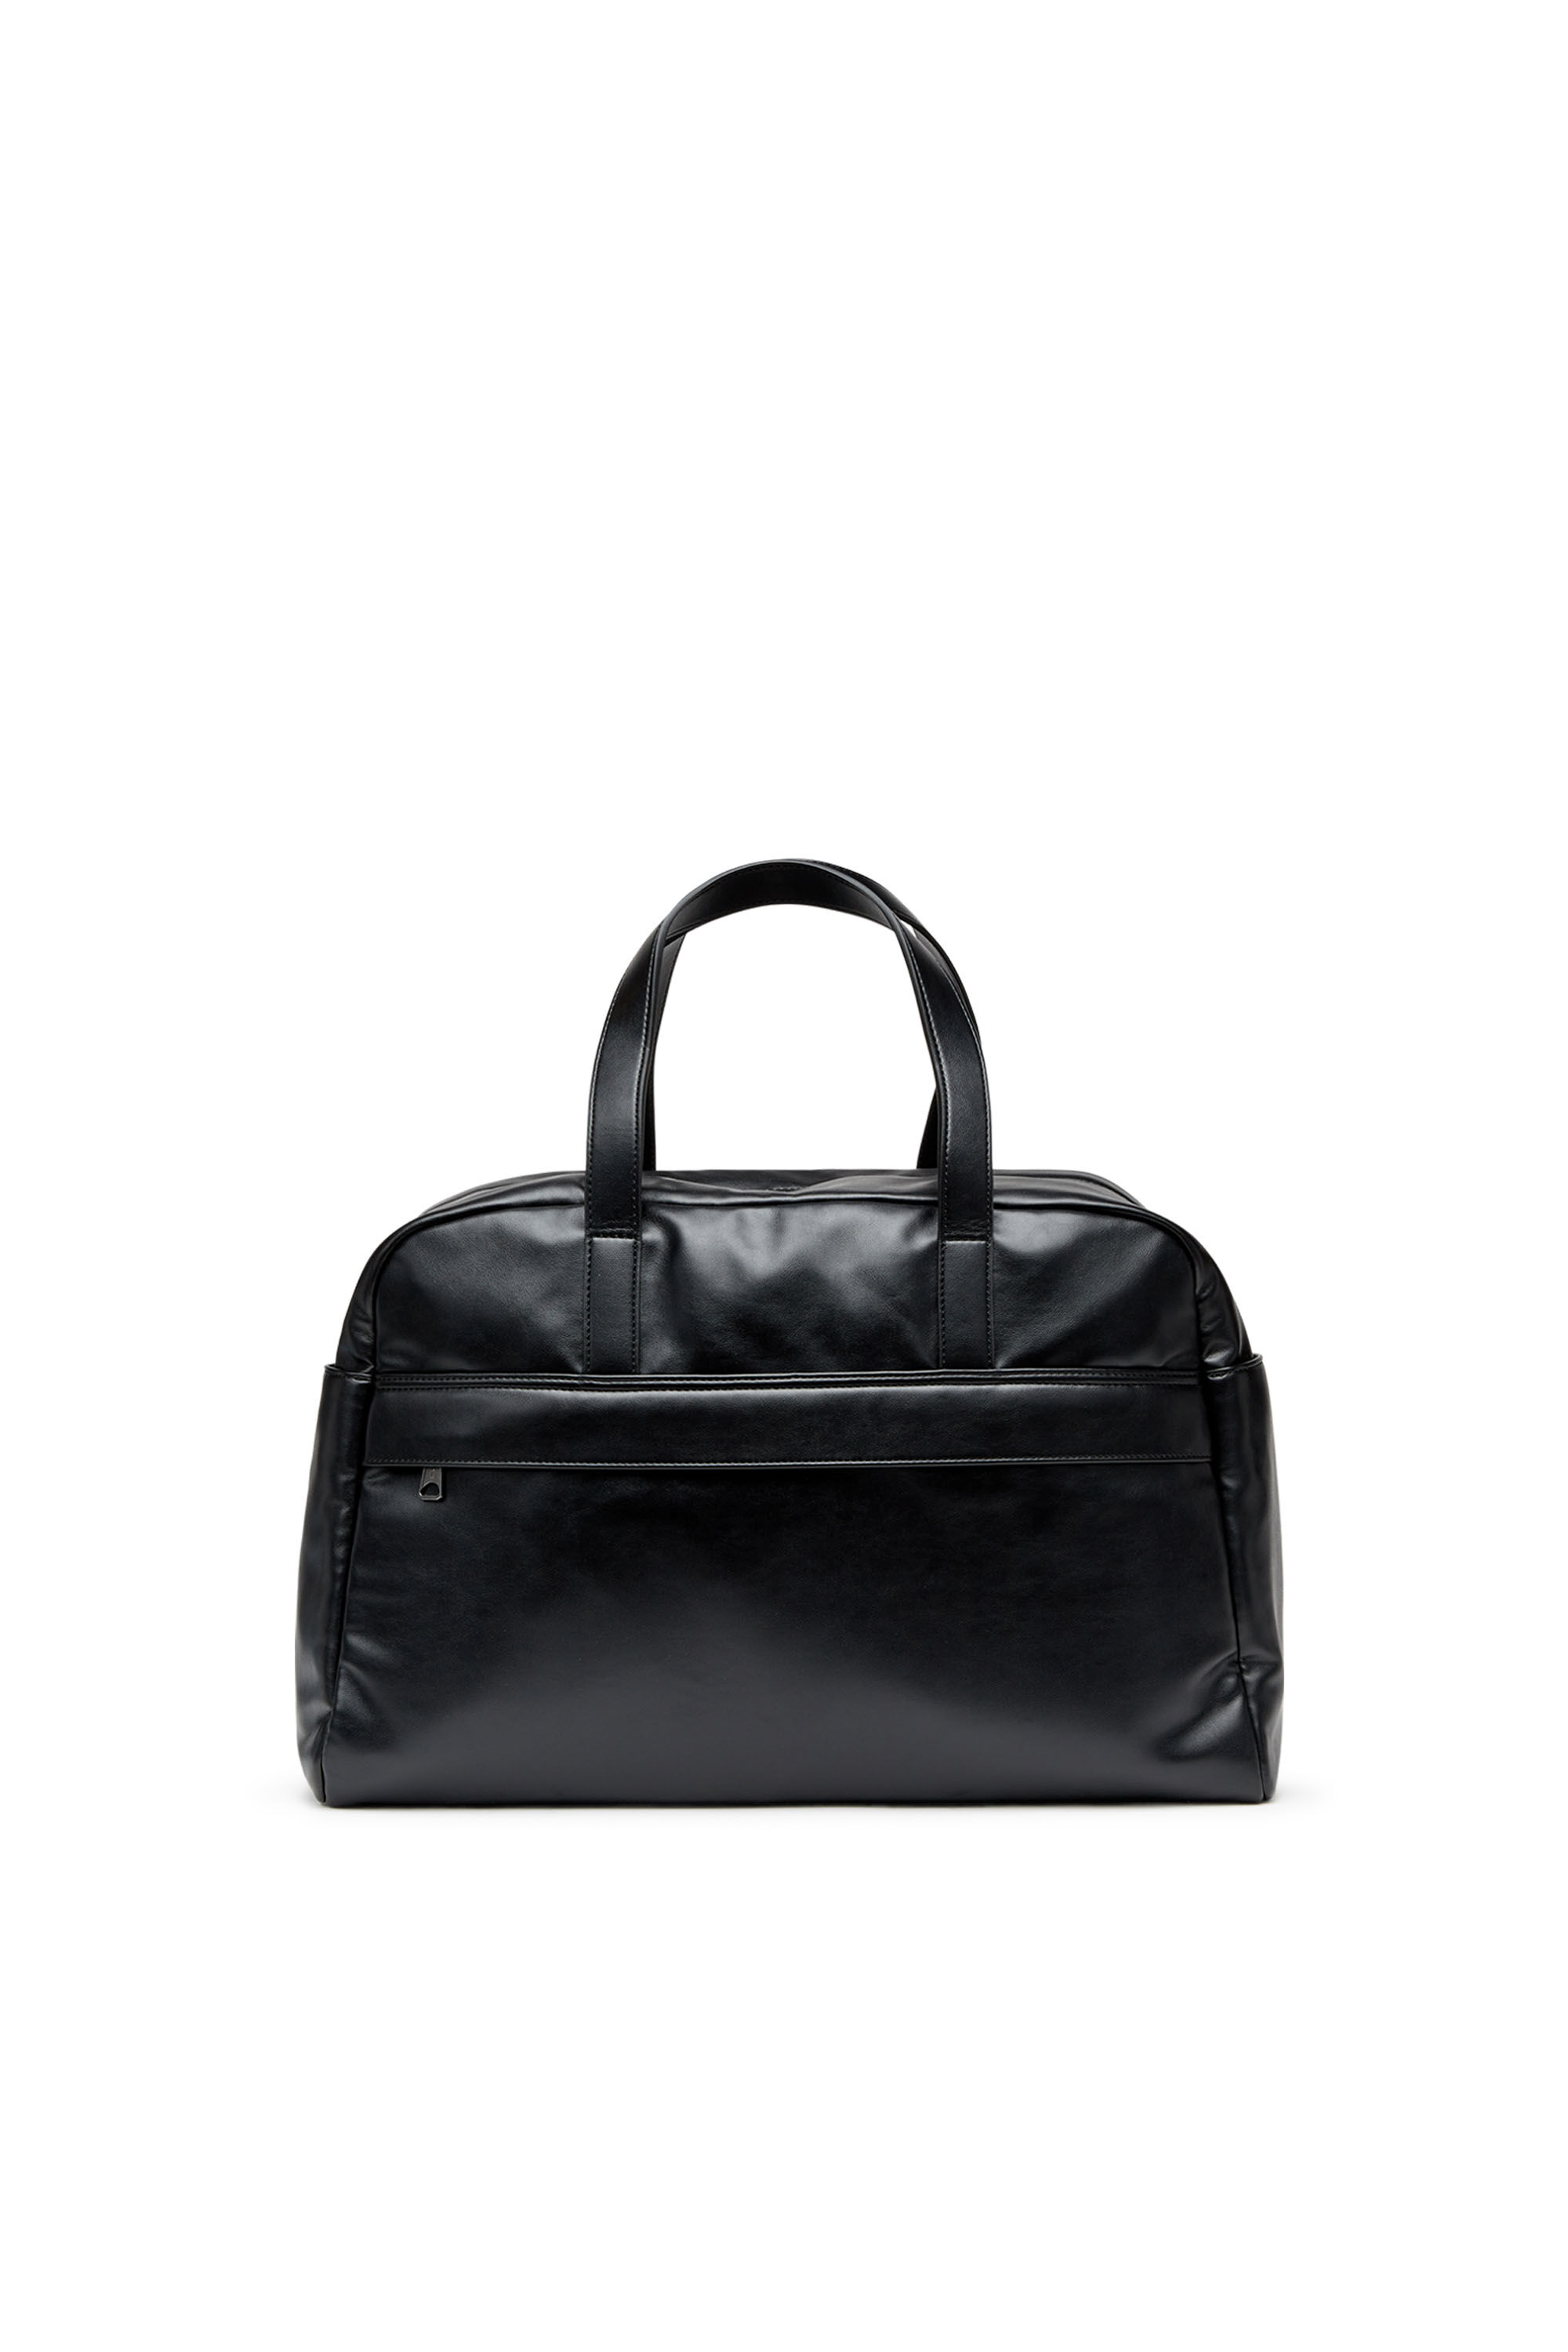 Women's Dsl 3D Duffle L X Travel Bag - Duffle bag with extreme 3D 